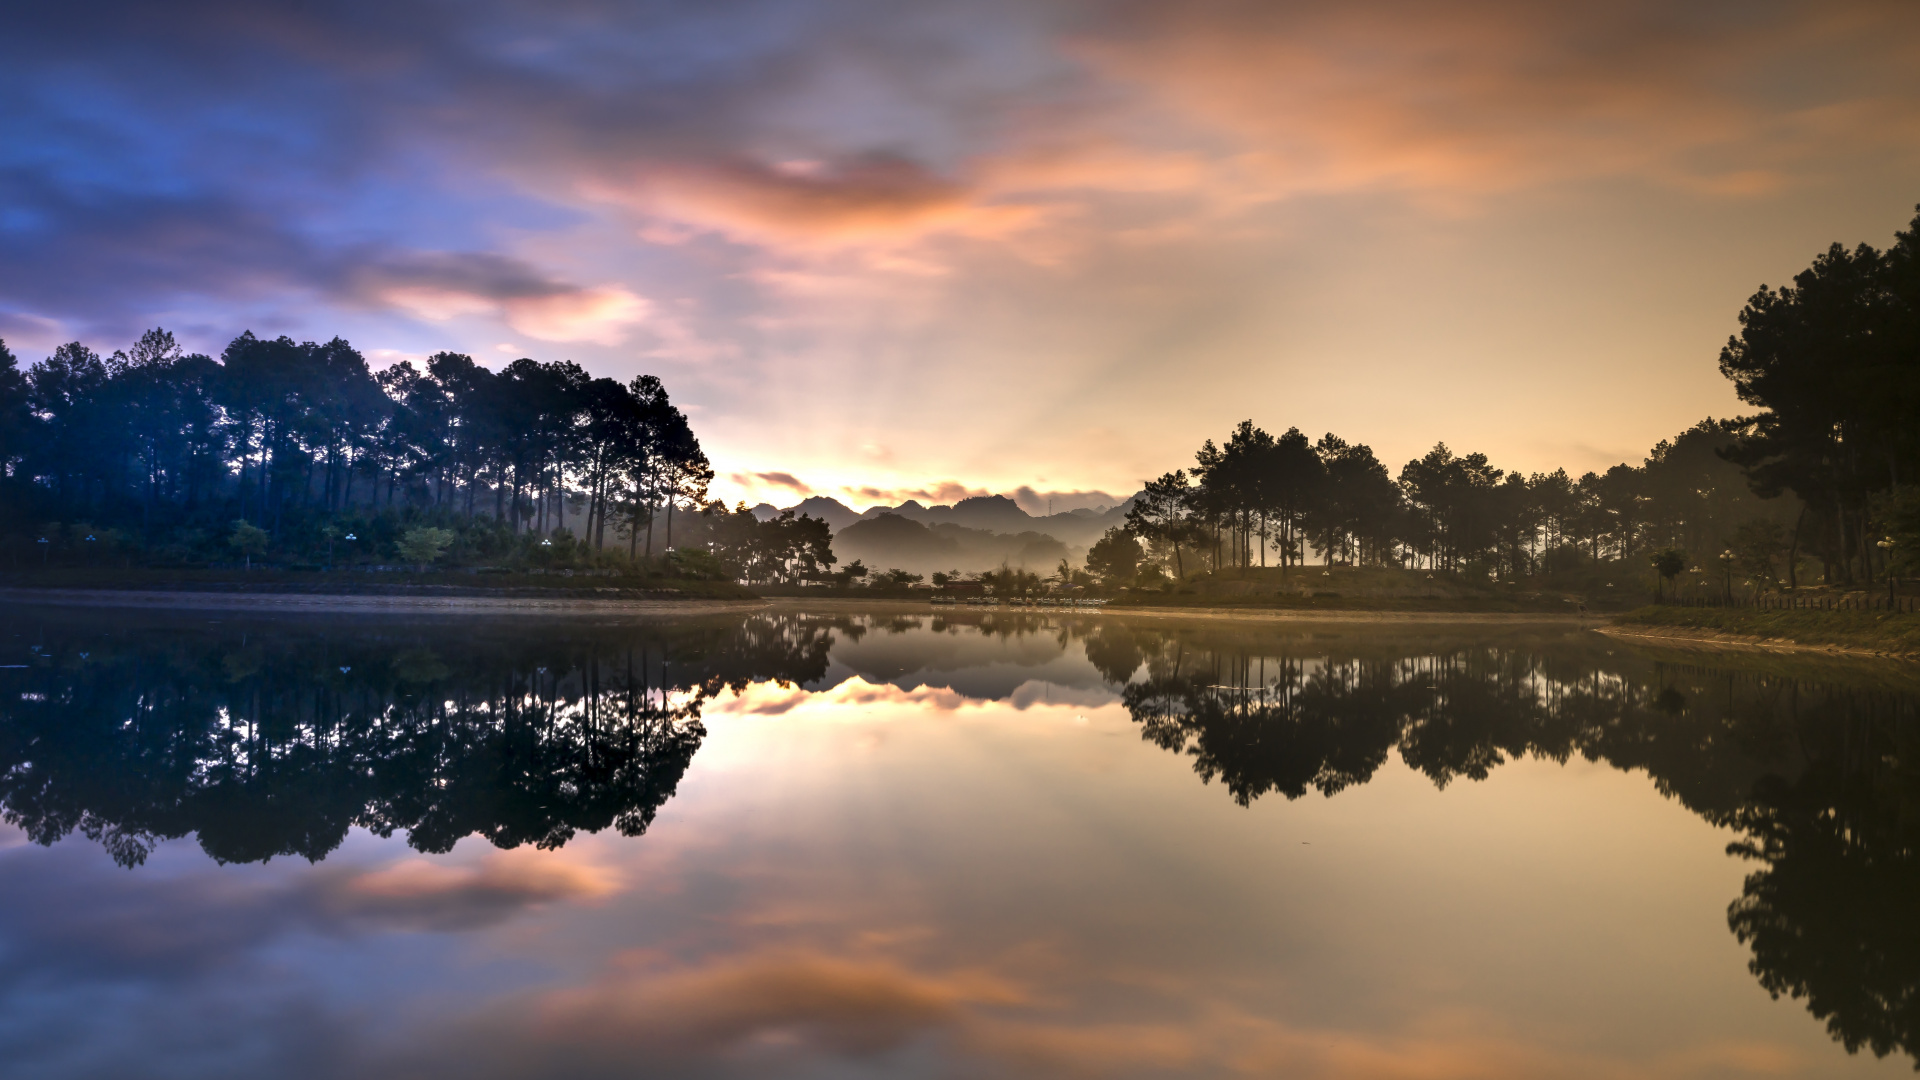 Reflections, Trees, Lake, Sunset, Nature, Wallpaper - 명상, 긴장과 스트레스 해소 피로를 풀어주는 내면의 평화를 위한 행복의 꿀잠 숙면 피아노자장가 , HD Wallpaper & Backgrounds